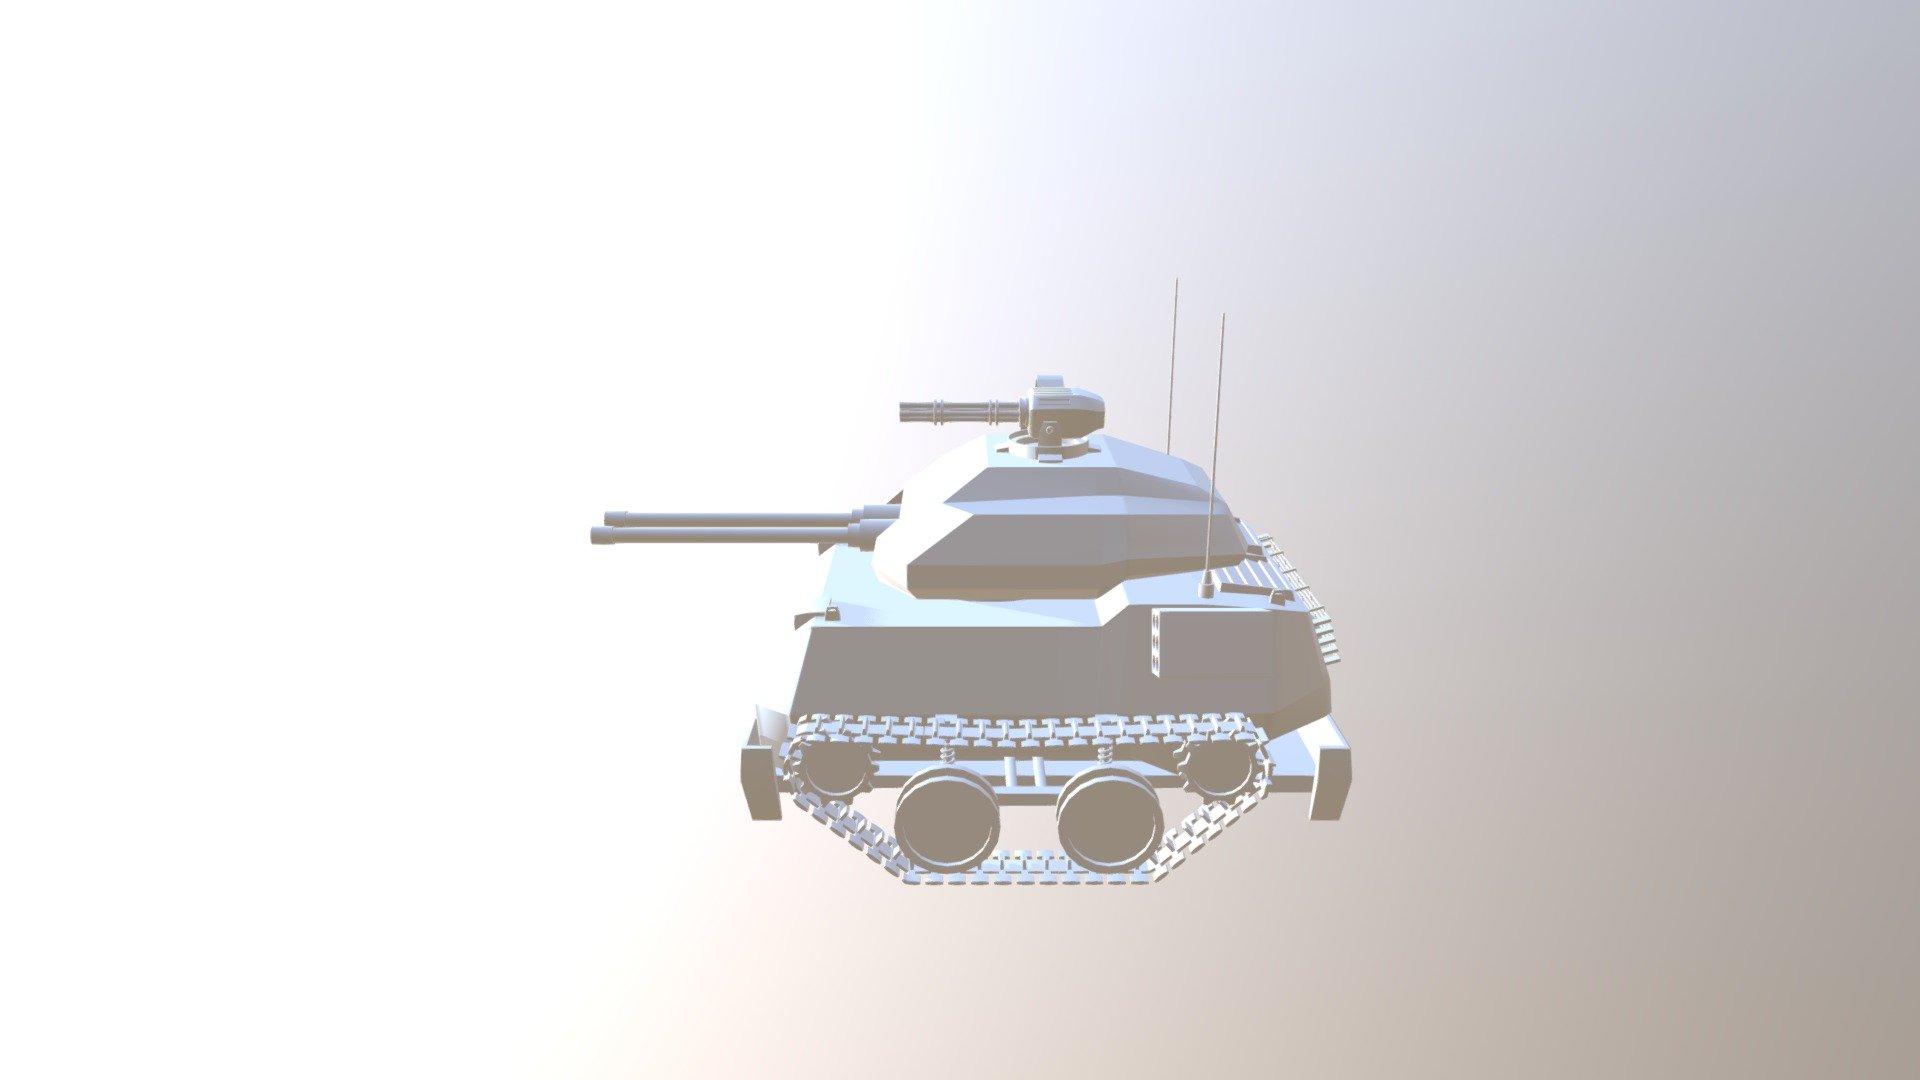 futuristic military tank sketch